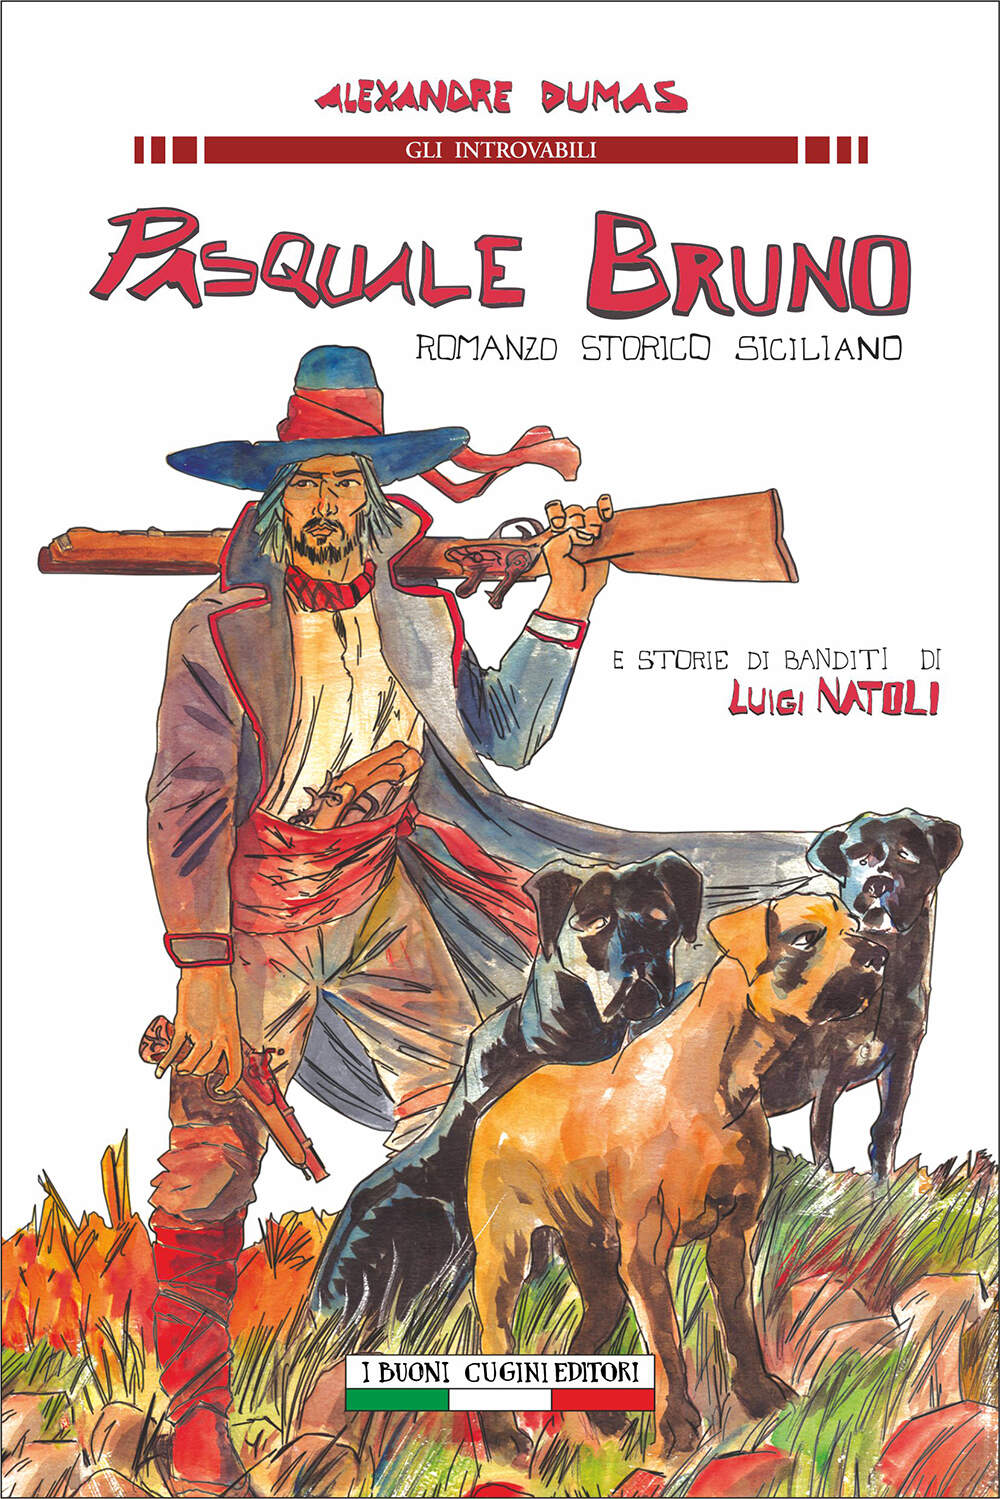 "Pasquale Bruno"